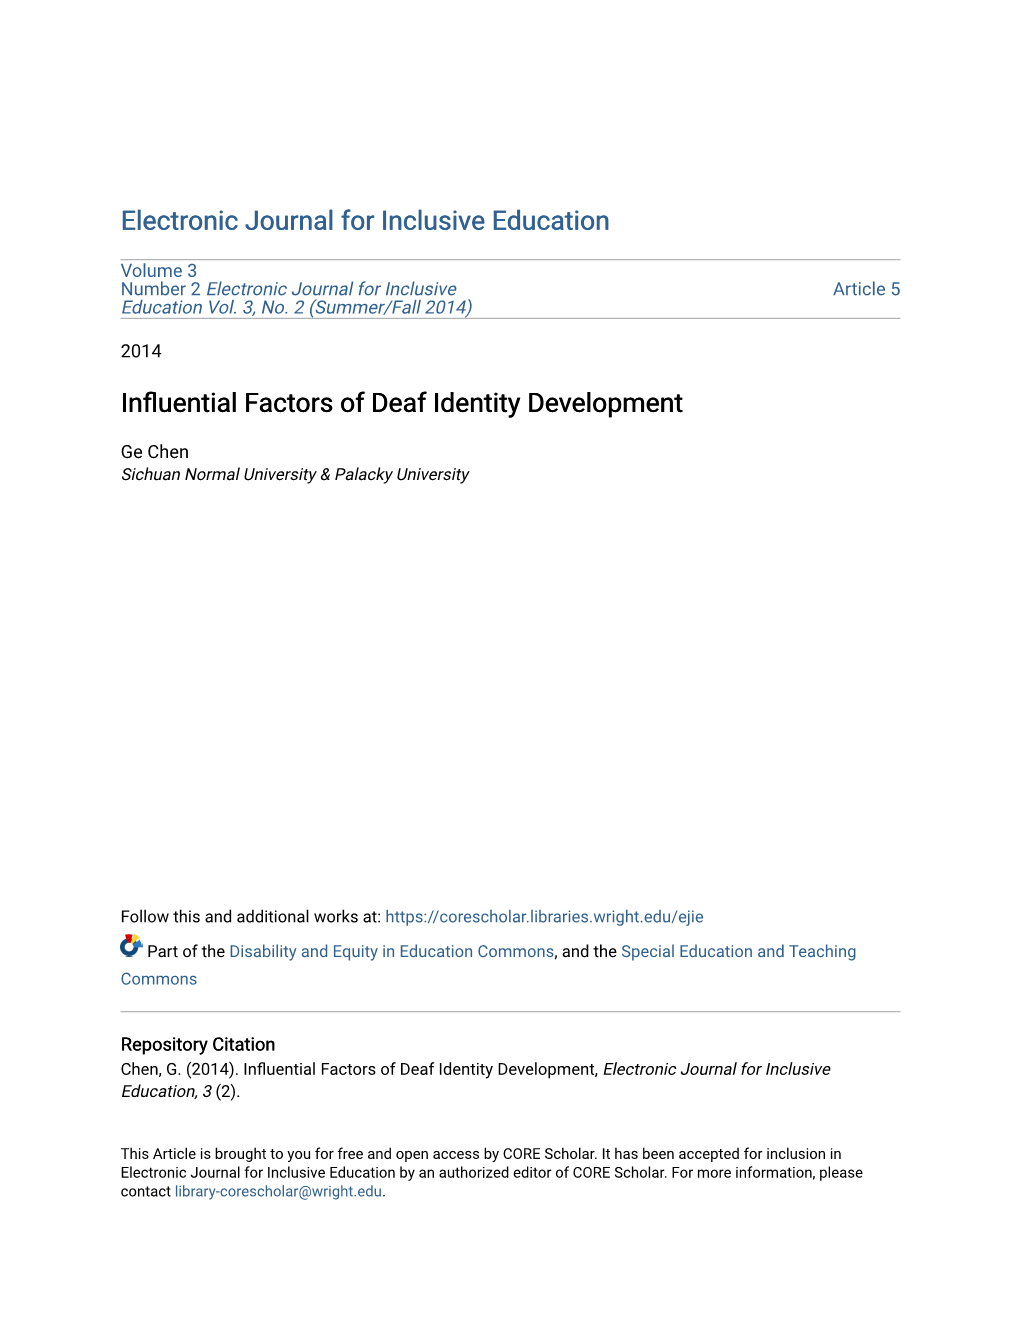 Influential Factors of Deaf Identity Development